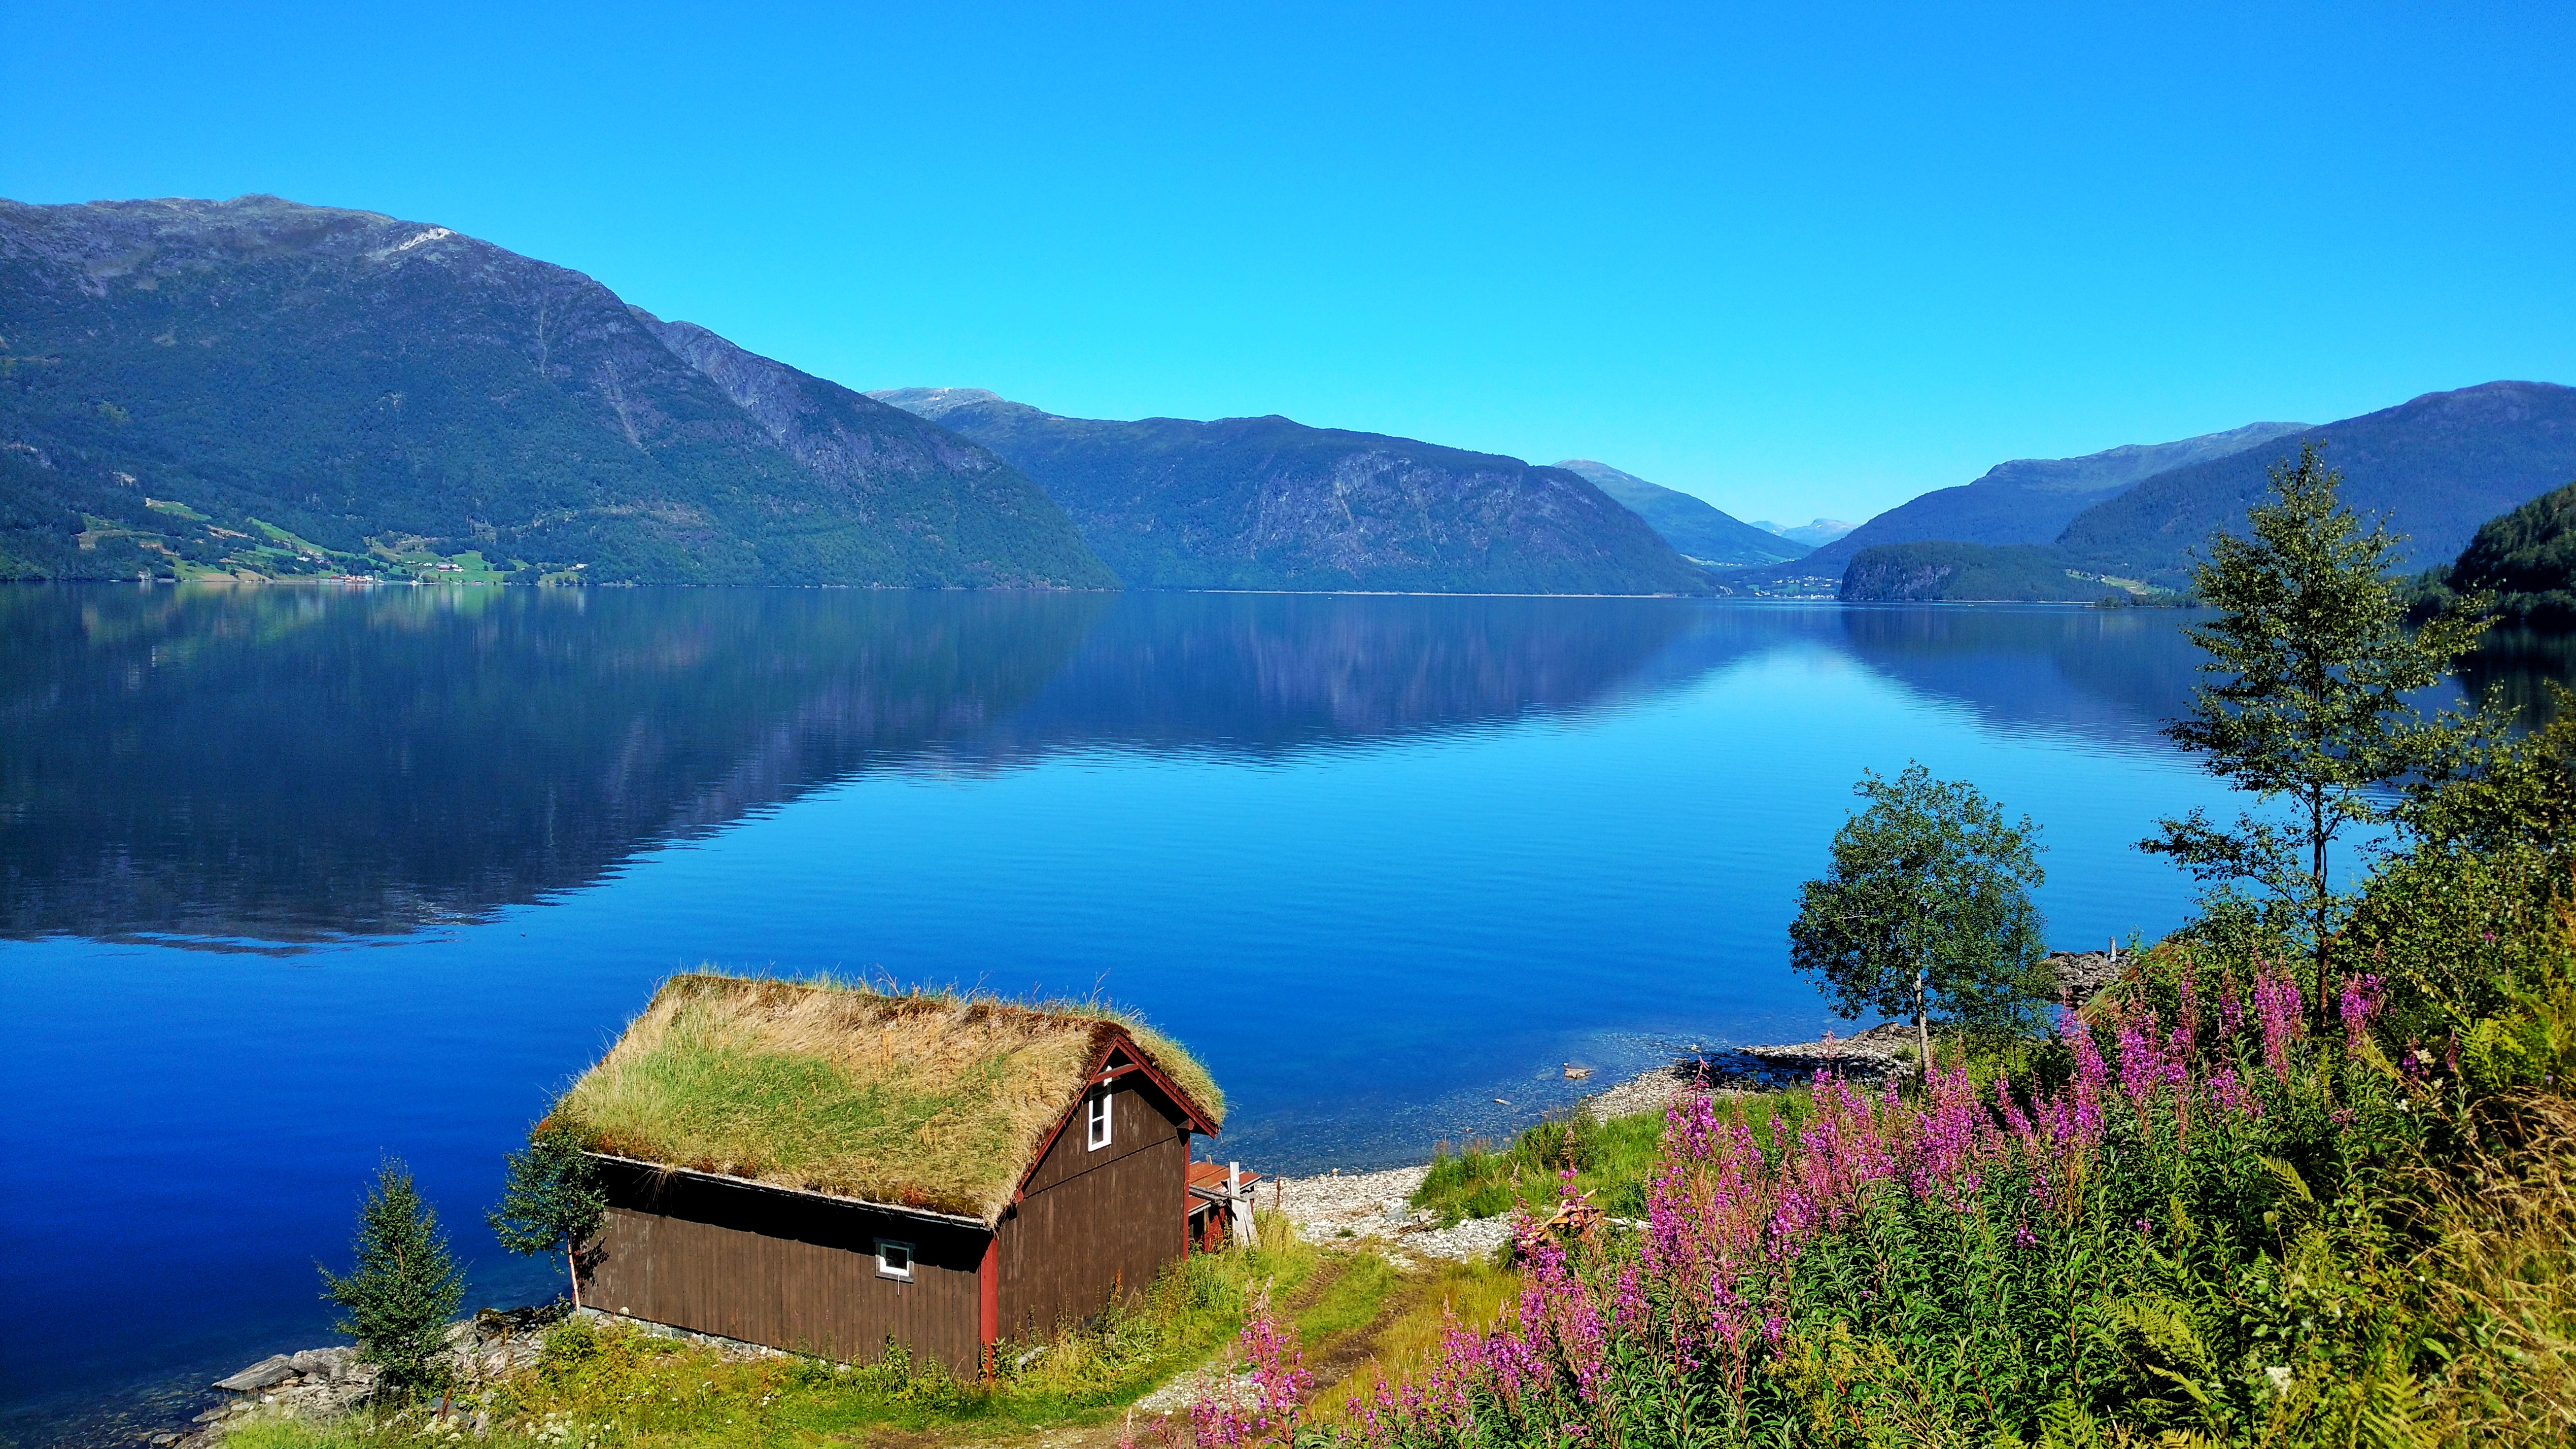 Глубокое озеро домики. Норвегия озеро Хорниндальсватнет. Самое глубокое озеро в Норвегии Хорниндальсватнет. Озеро МЬЁСА Норвегия. Озеро Фемунн в Норвегии.